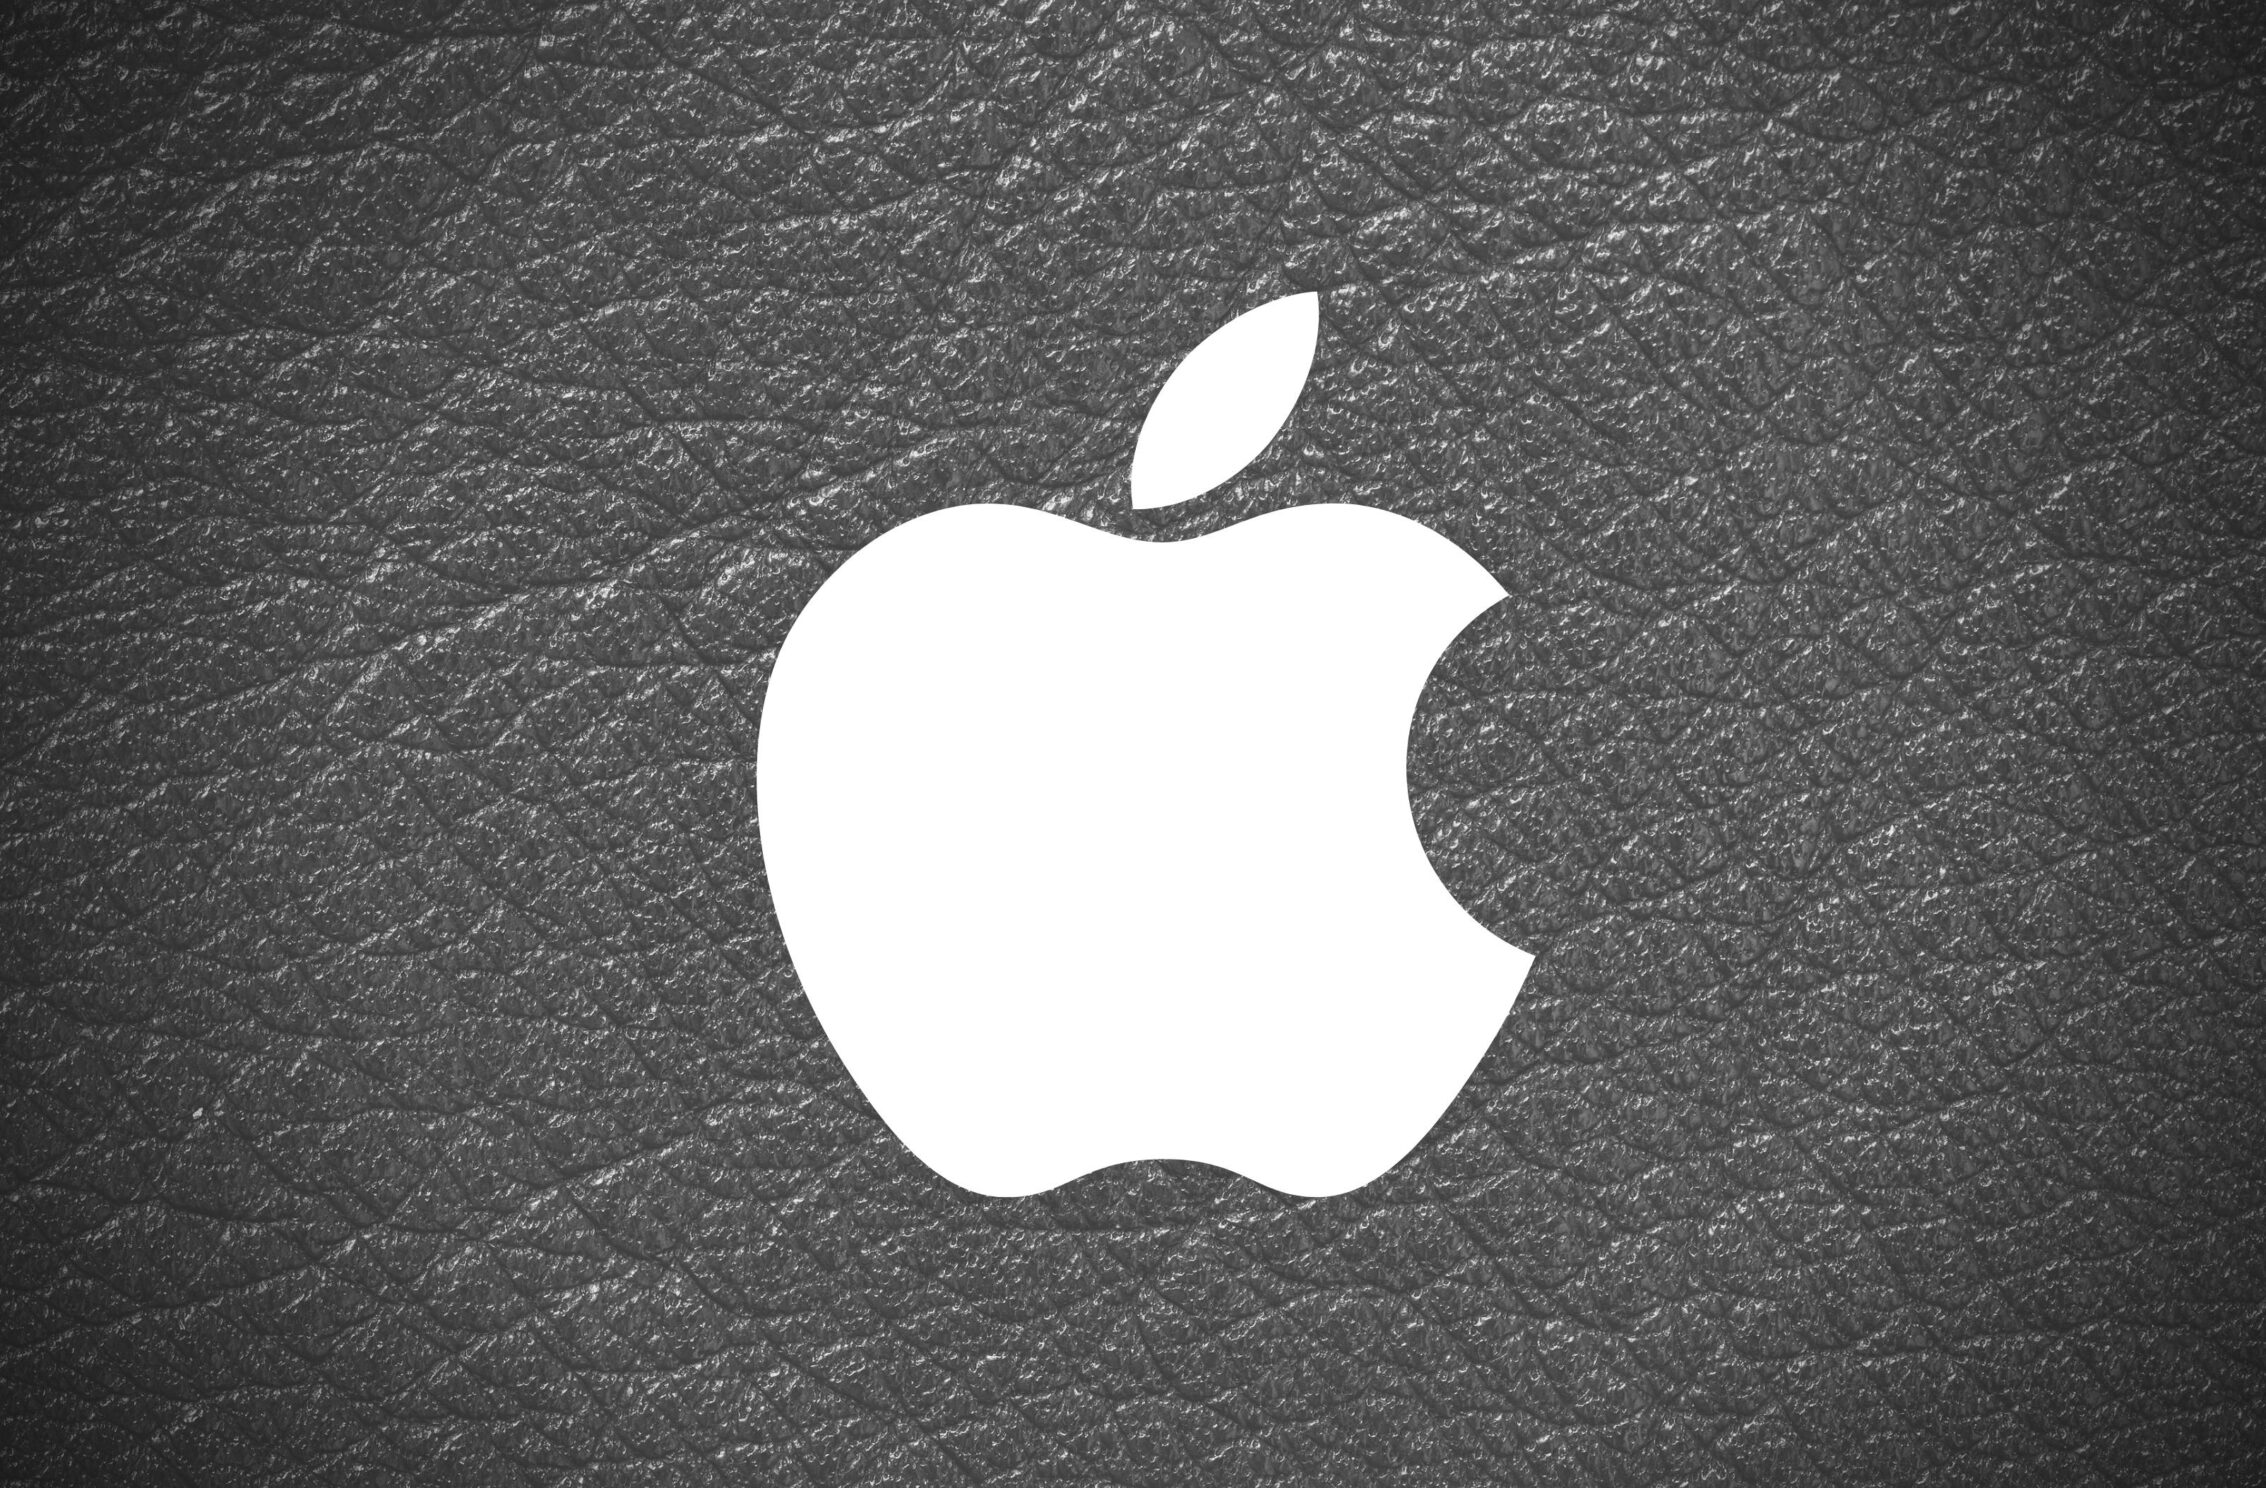 2266x1488 iPad Mini wallpapers Apple Logo Leather Black and White iPad Wallpaper 2266x1488 pixels resolution